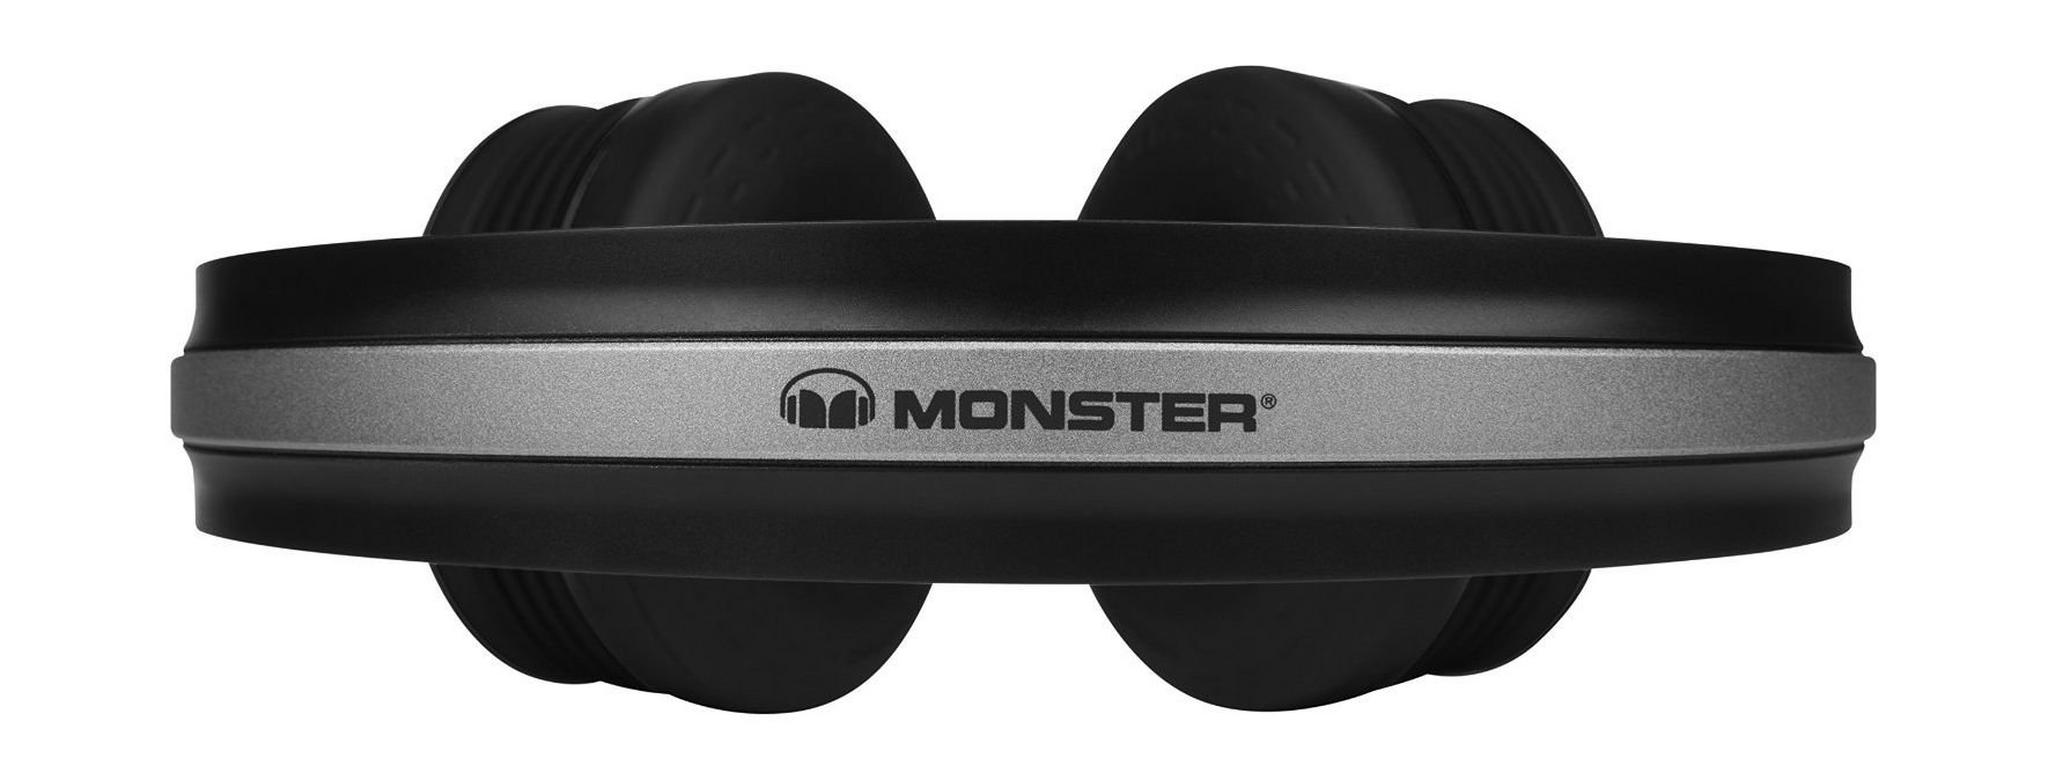 Monster iSport Freedom Wireless Bluetooth On-Ear Headphones - Black